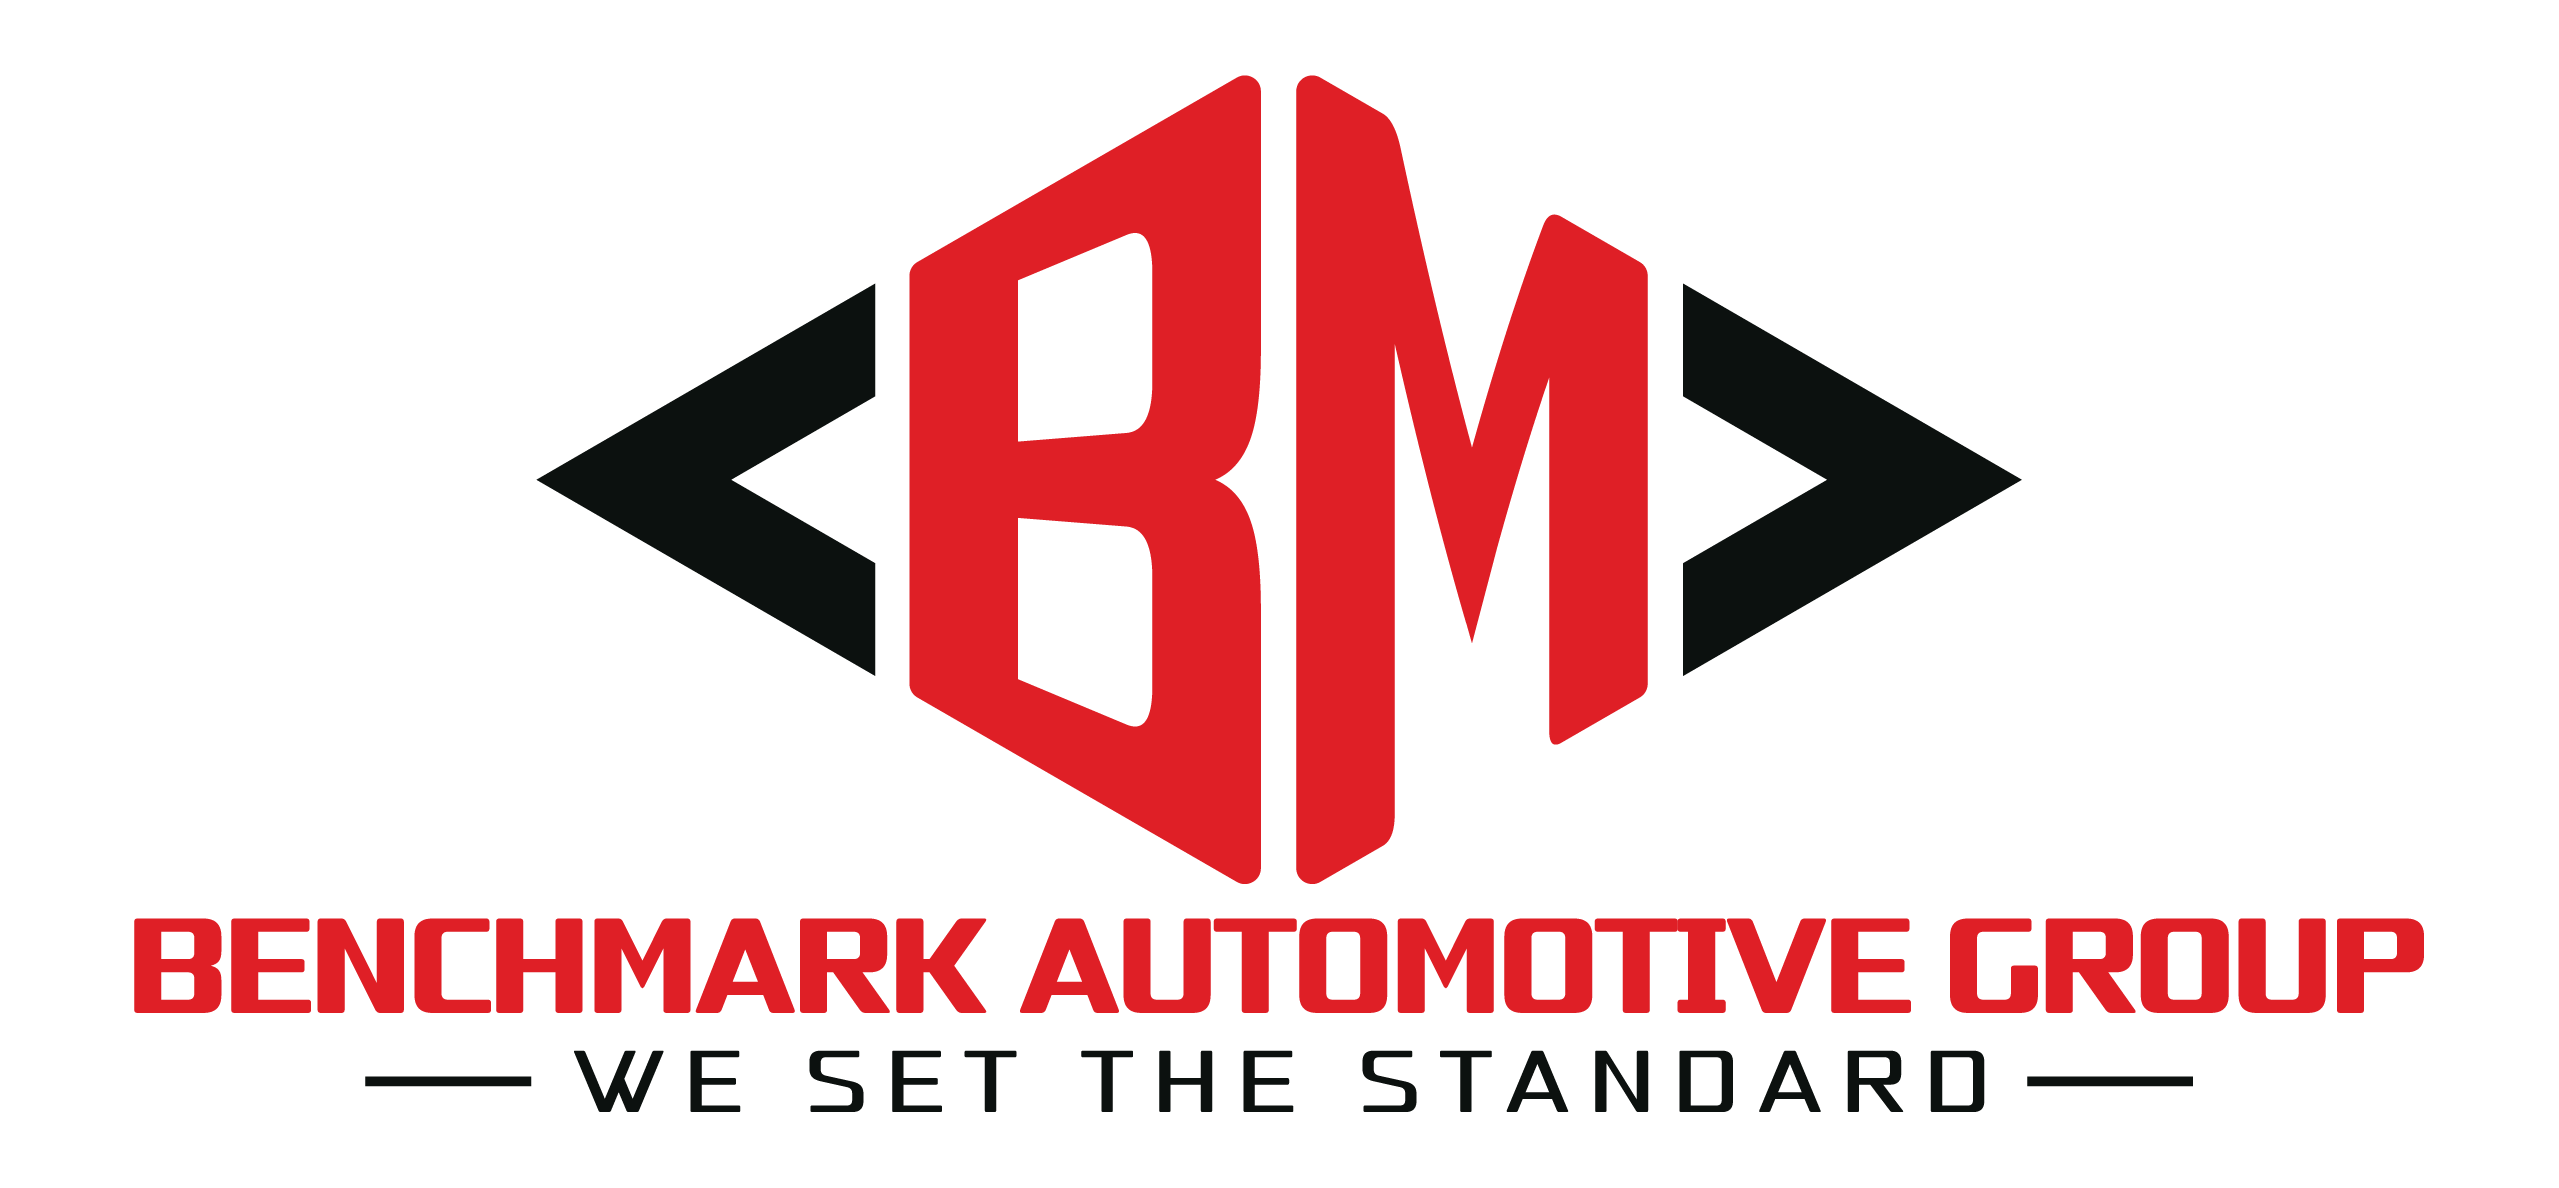 Benchmark Automotive Group